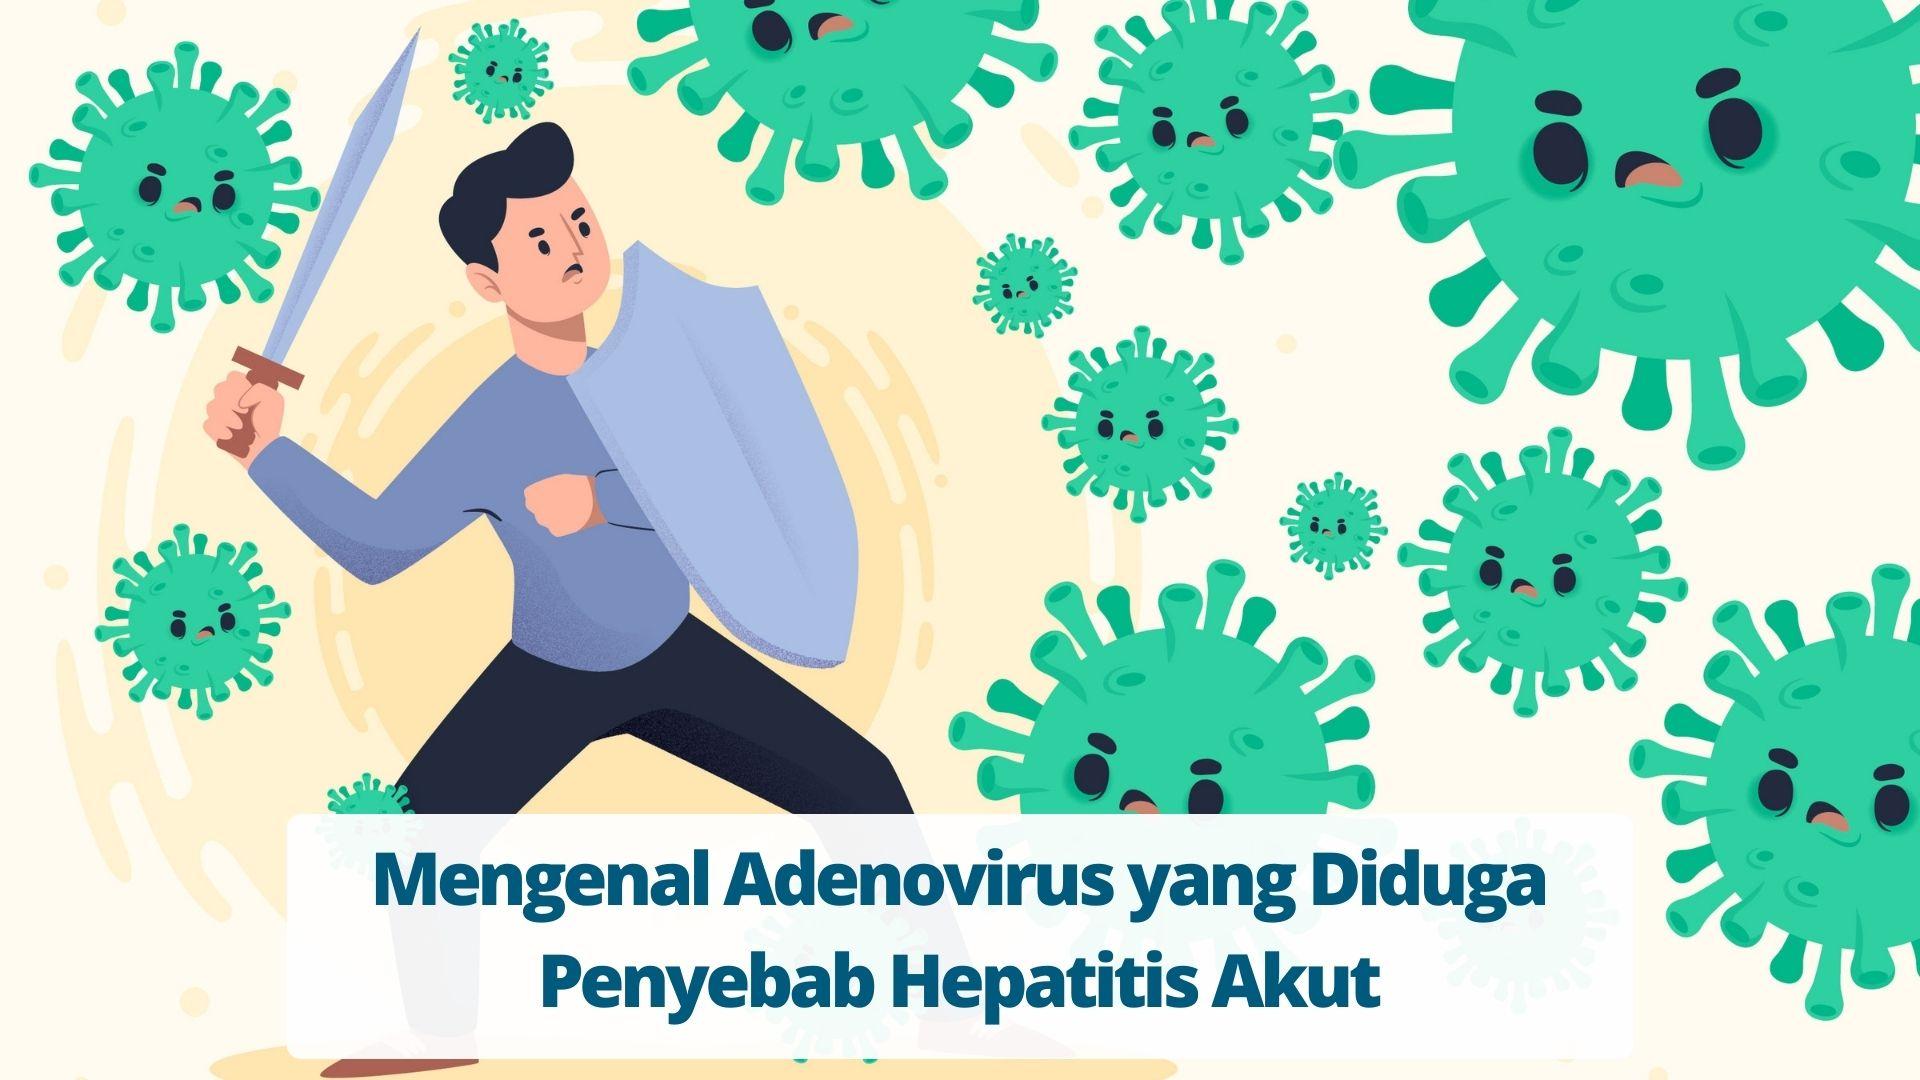 Mengenal Adenovirus yang Diduga Penyebab Hepatitis Akut